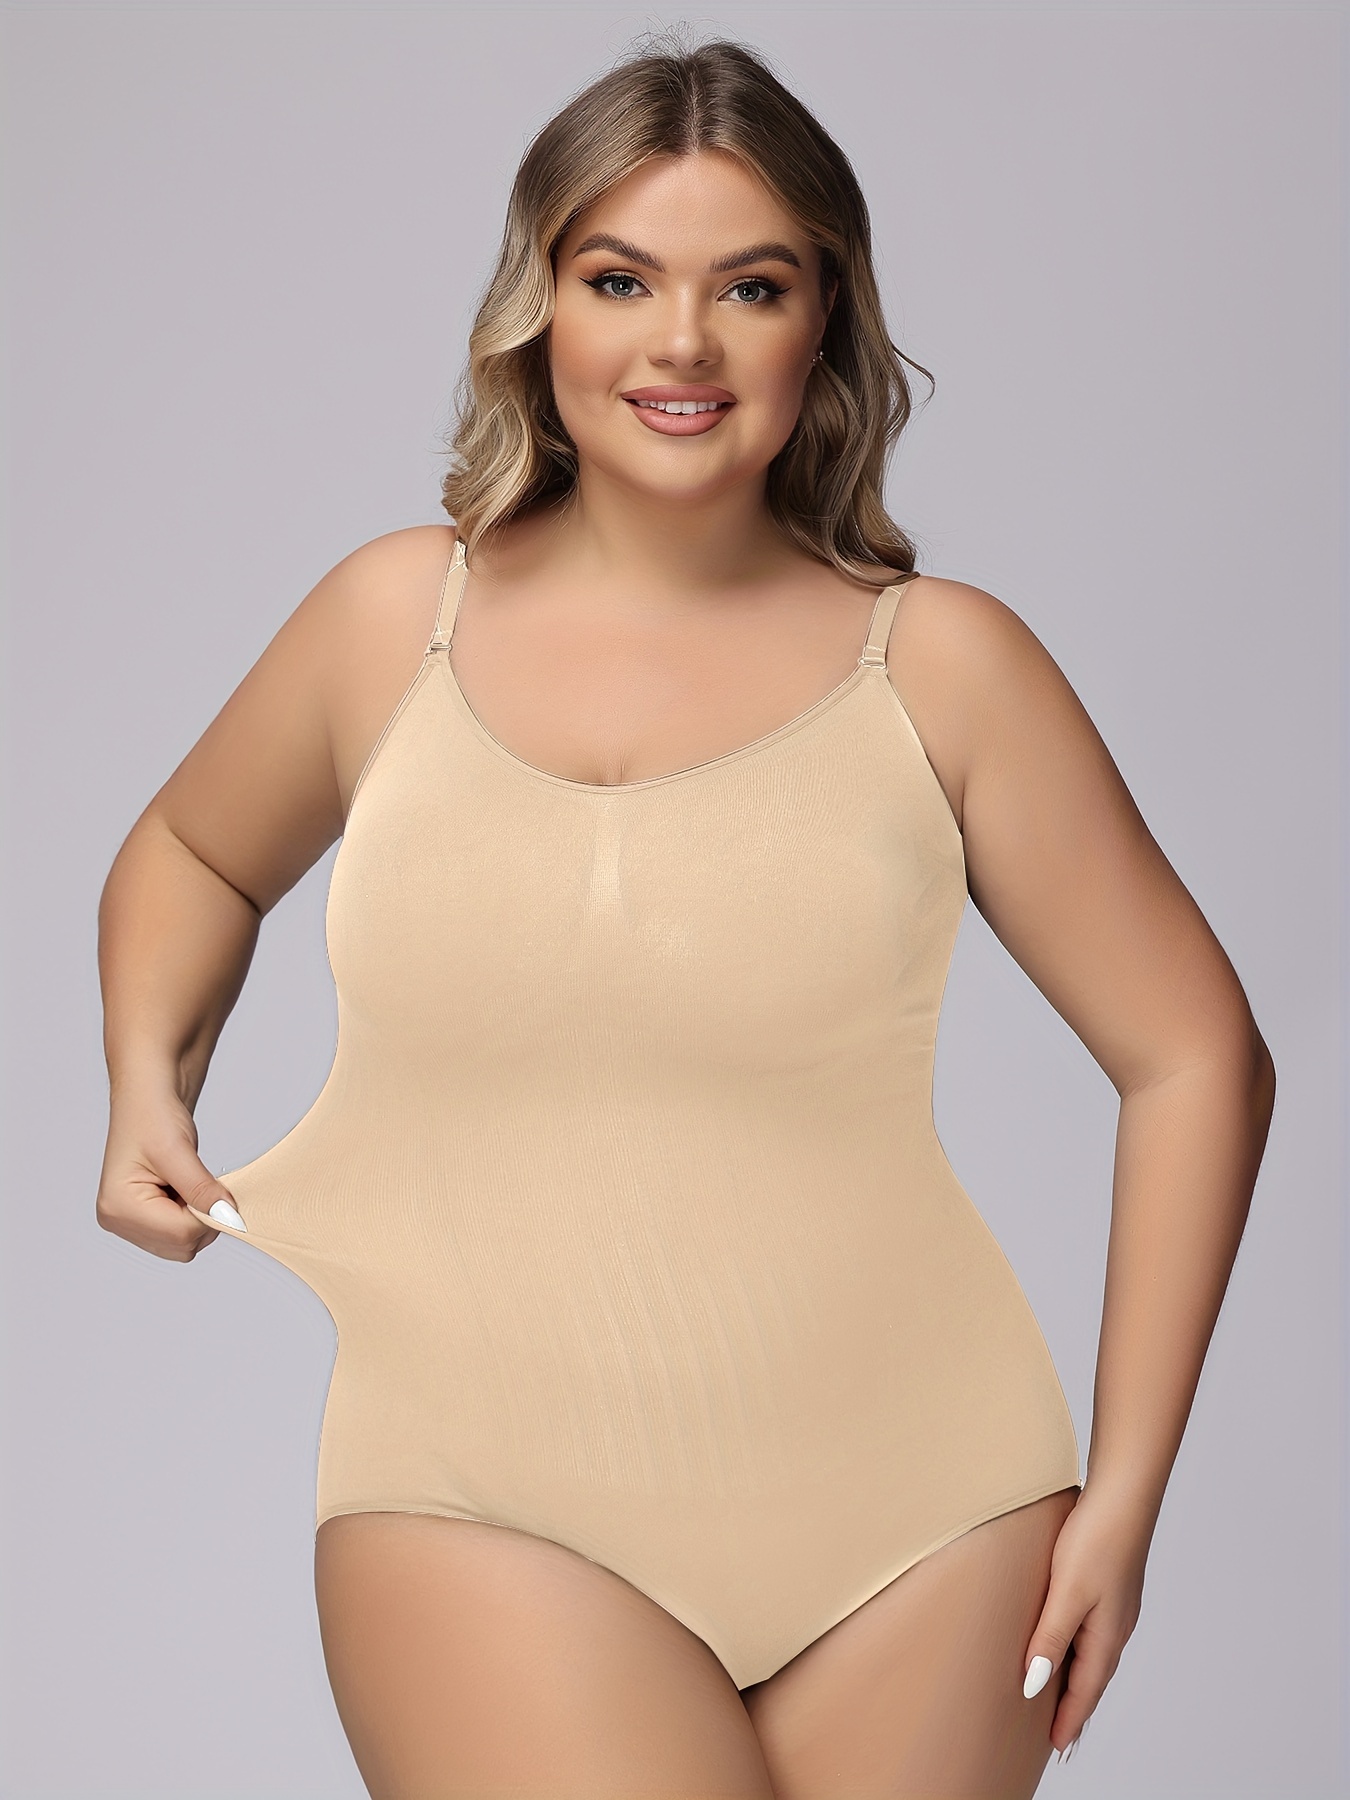 Plus Size Bodysuit for Women Slimming Shapewear Tummy Control